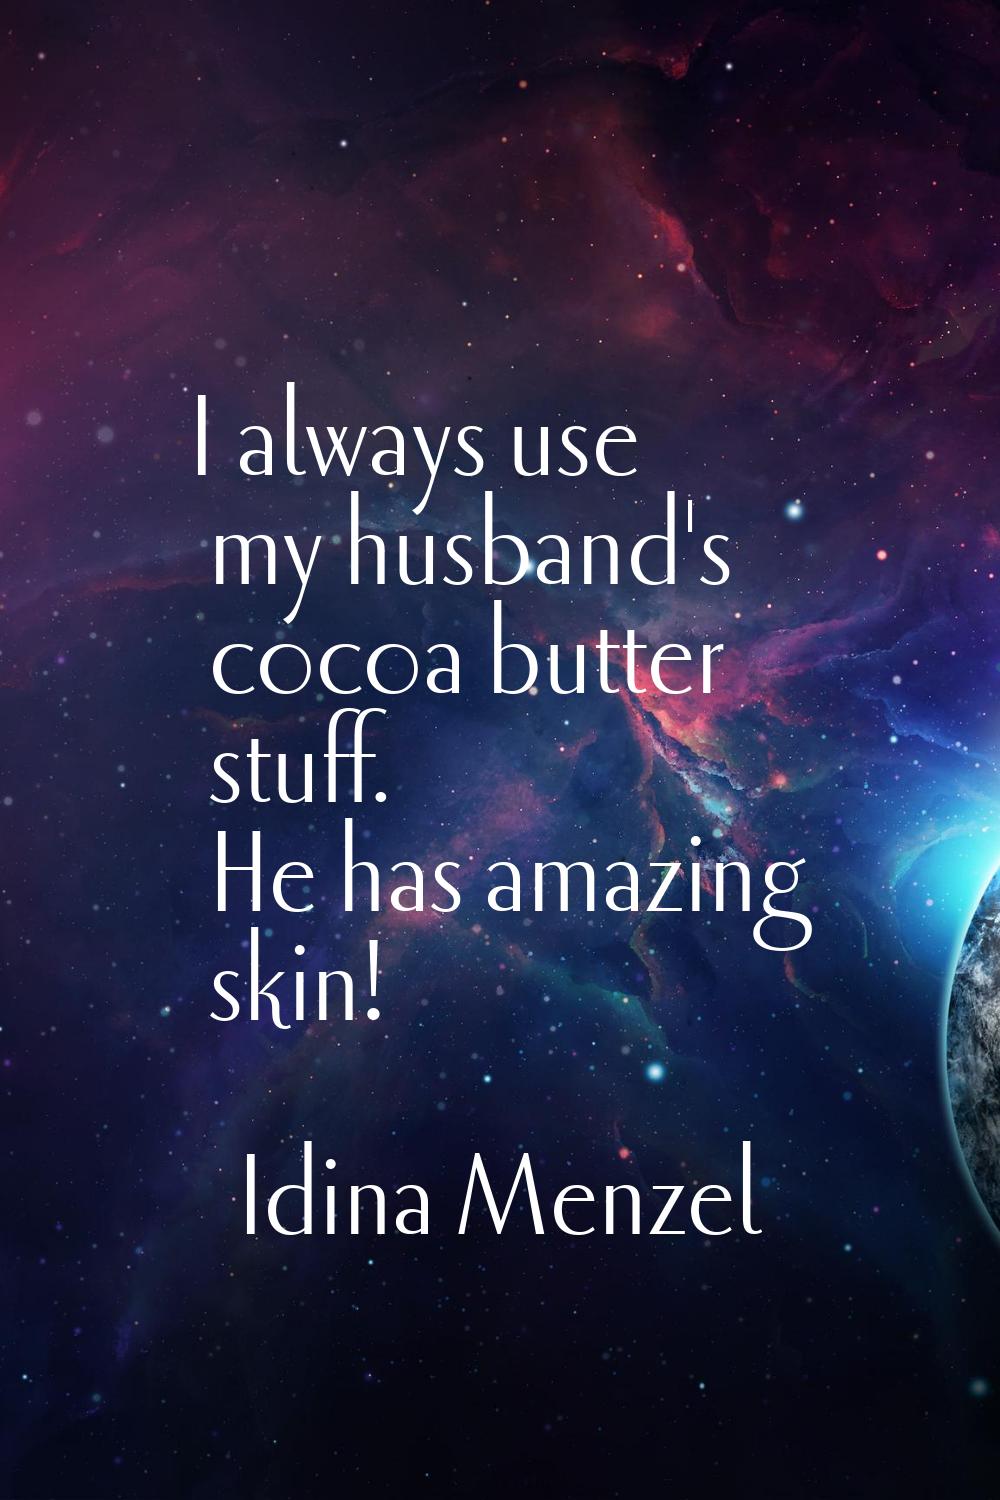 I always use my husband's cocoa butter stuff. He has amazing skin!